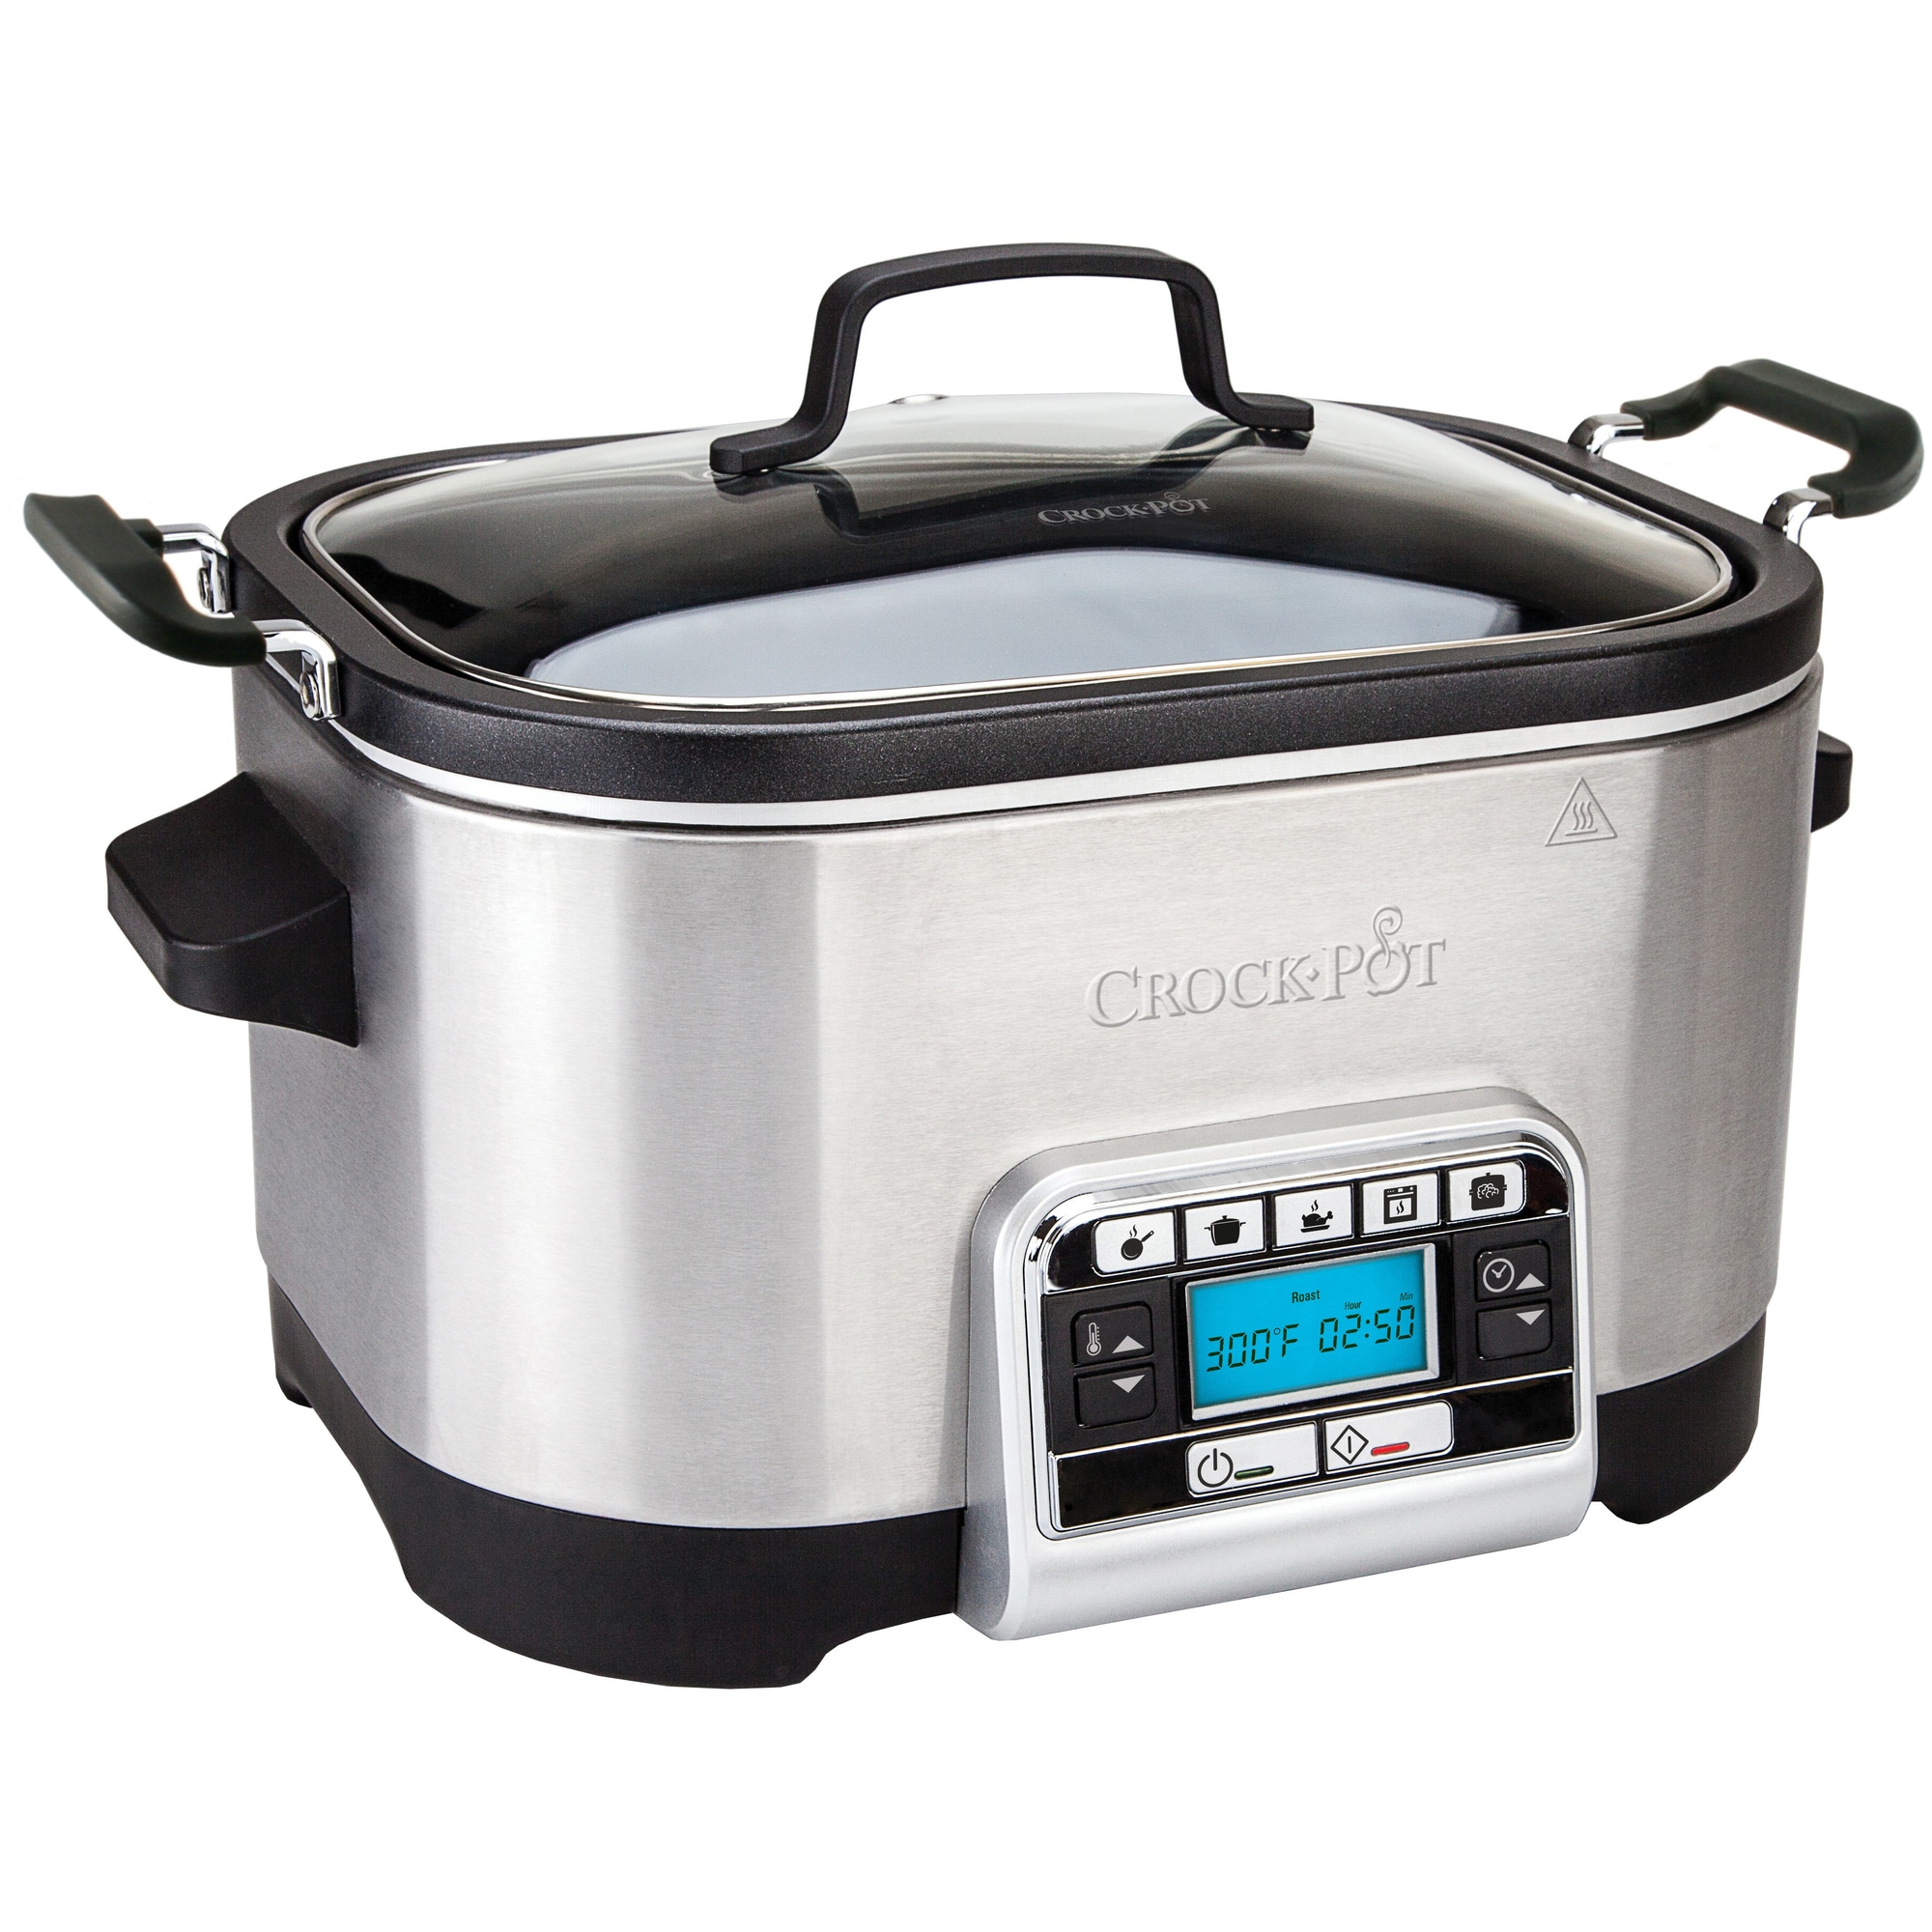 9: Crock-Pot slow cooker